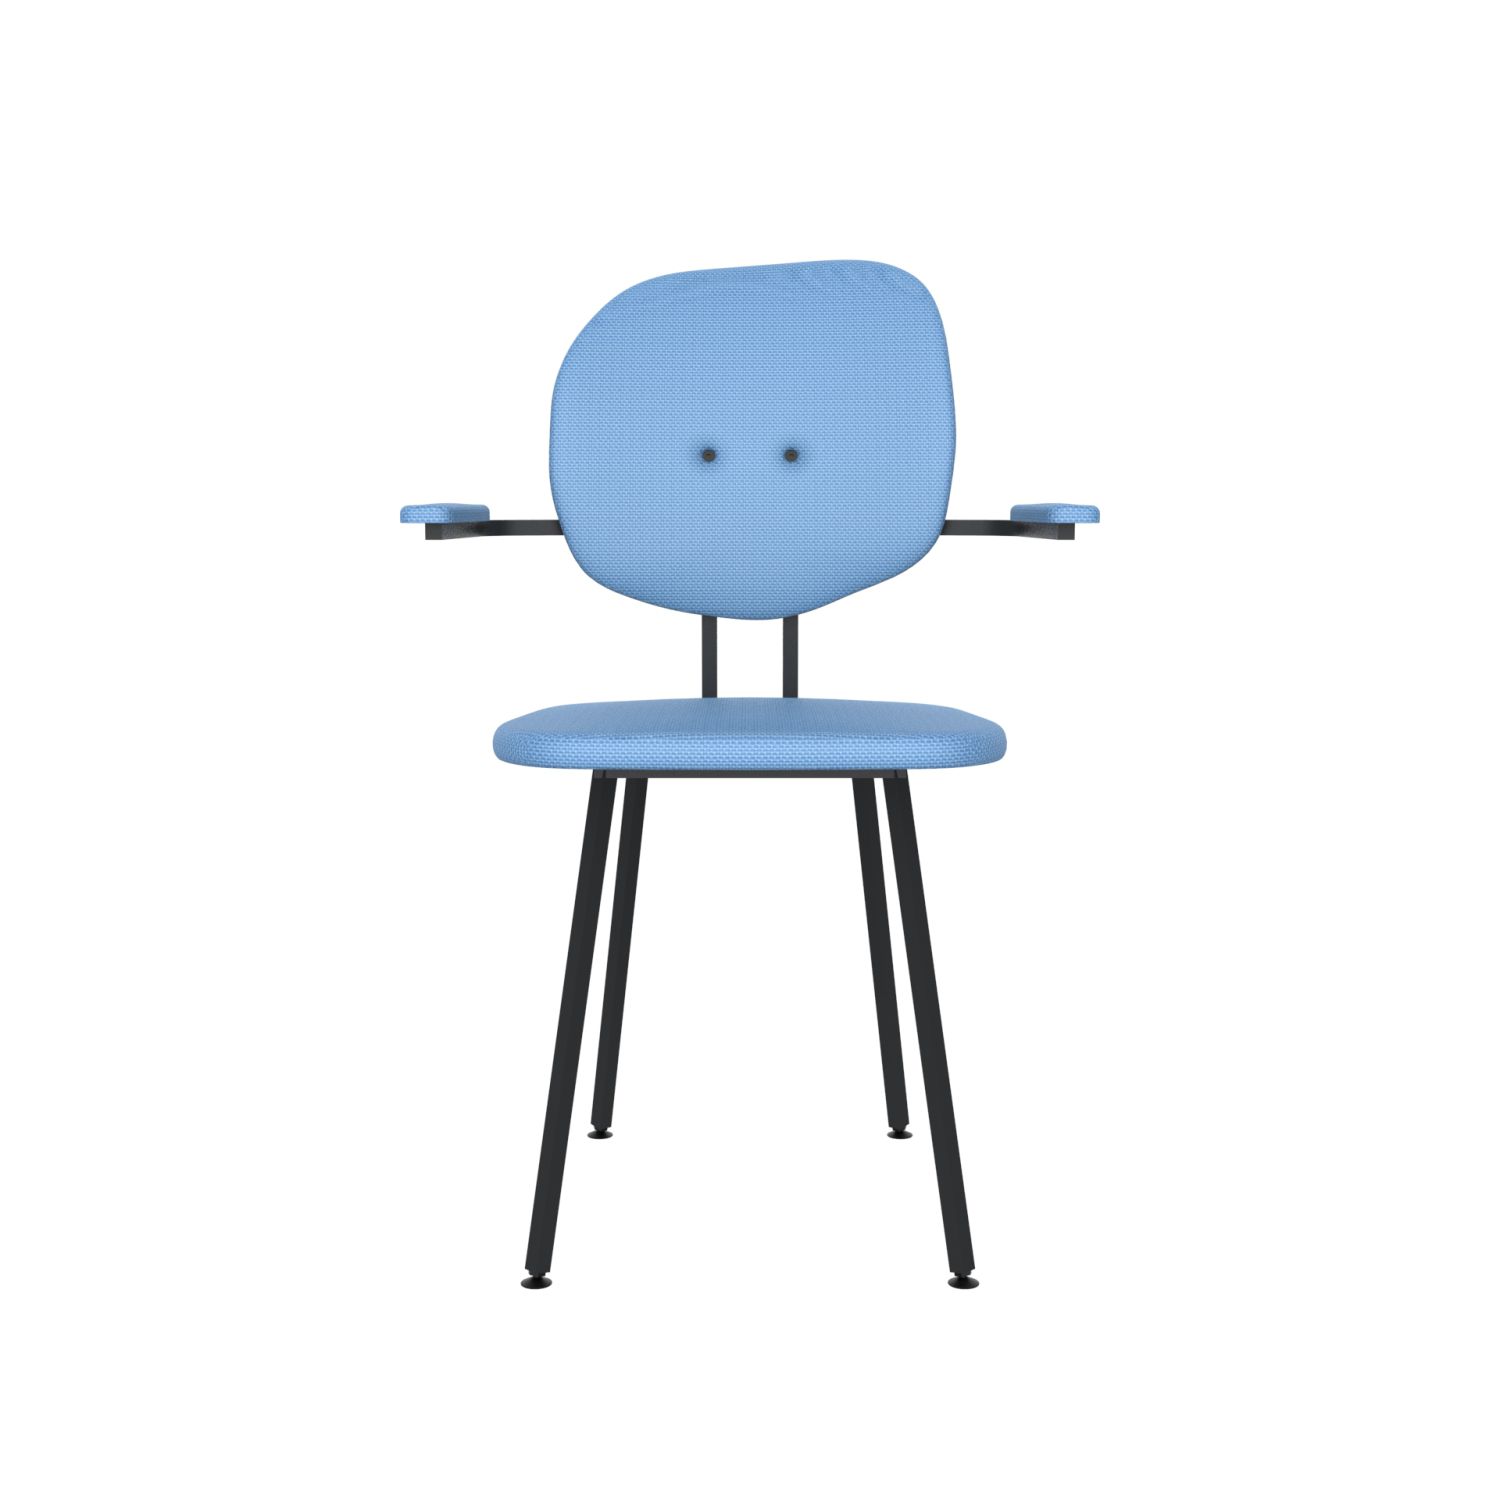 lensvelt maarten baas chair 102 not stackable with armrests backrest h blue horizon 040 black ral9005 hard leg ends